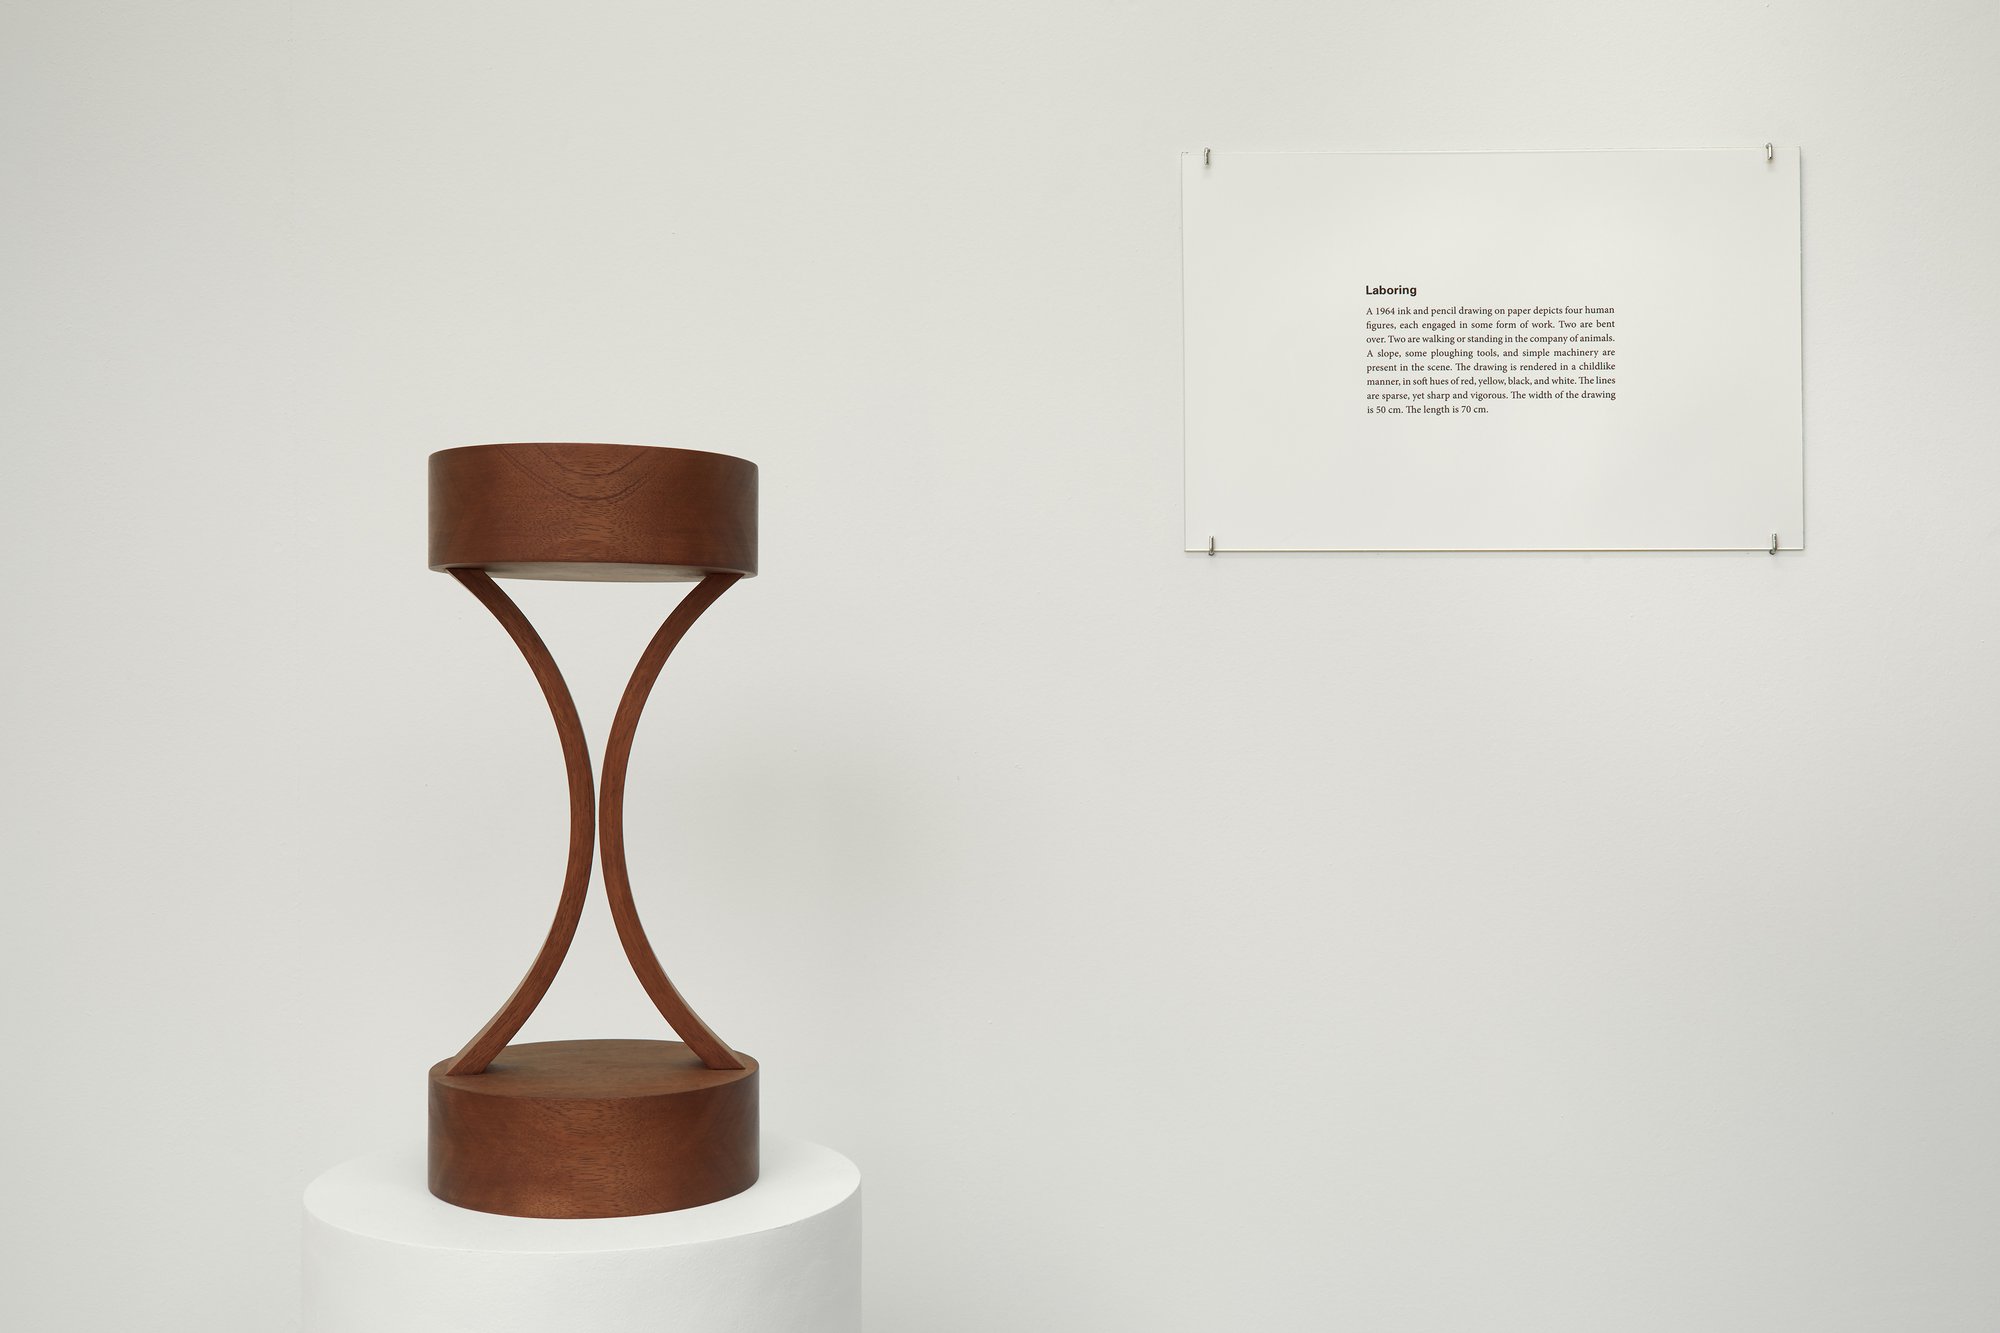 Iman Issa, Labouring (study for 2012), mahogany sculpture, text panel under glass, white plinth, sculpture: 39.4 x Ø18 cm, plinth: 95.2 x Ø30 cm, 2012